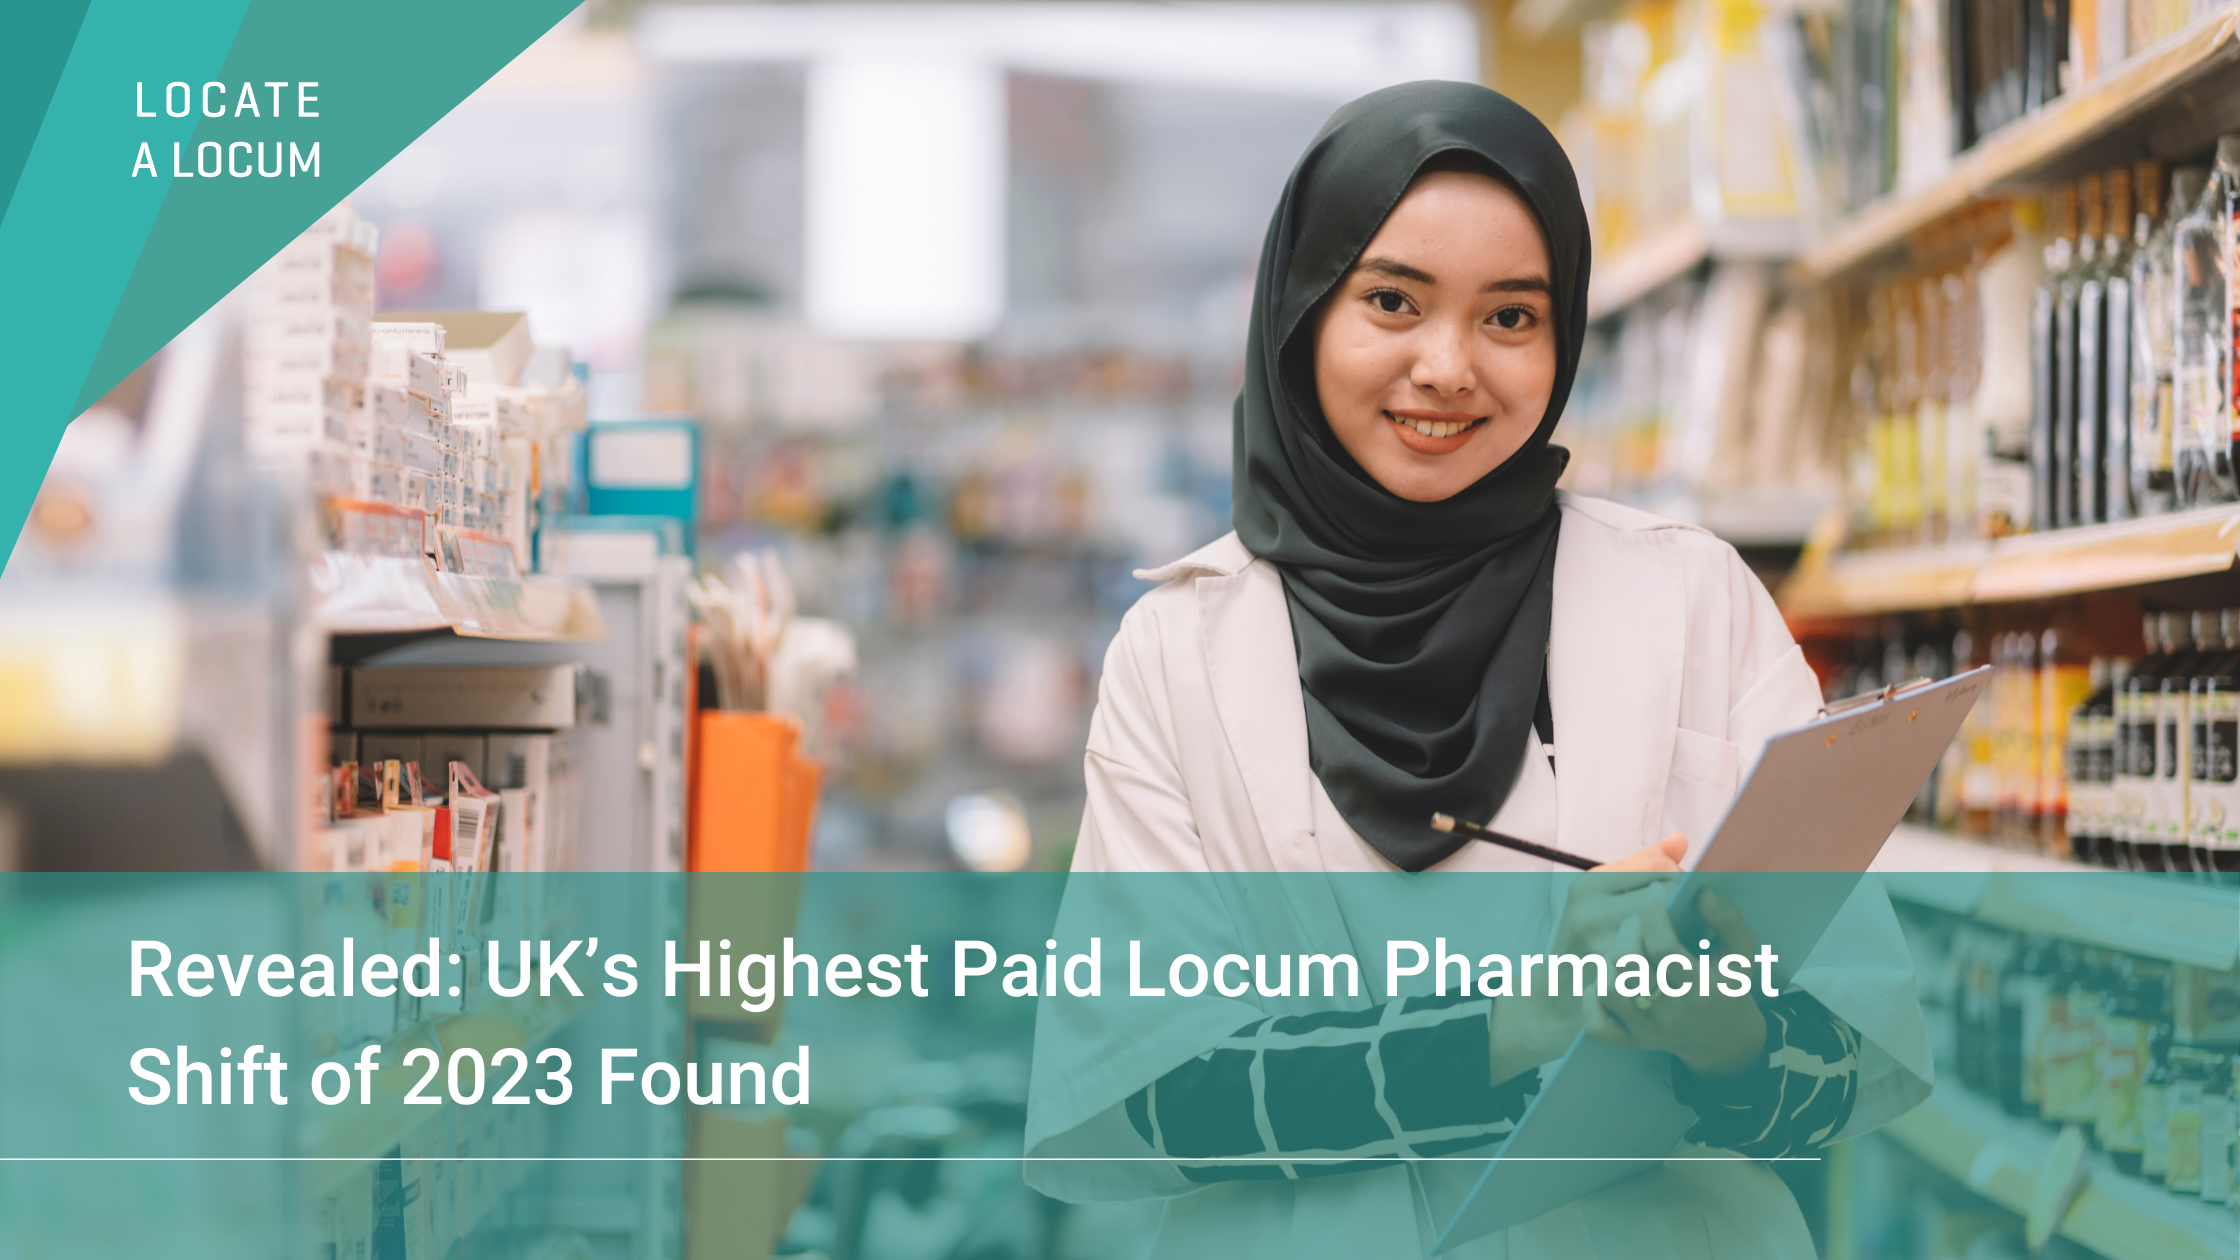 UKs-Highest-Paid-Locum-Pharmacist-Shift-of-2023-Found